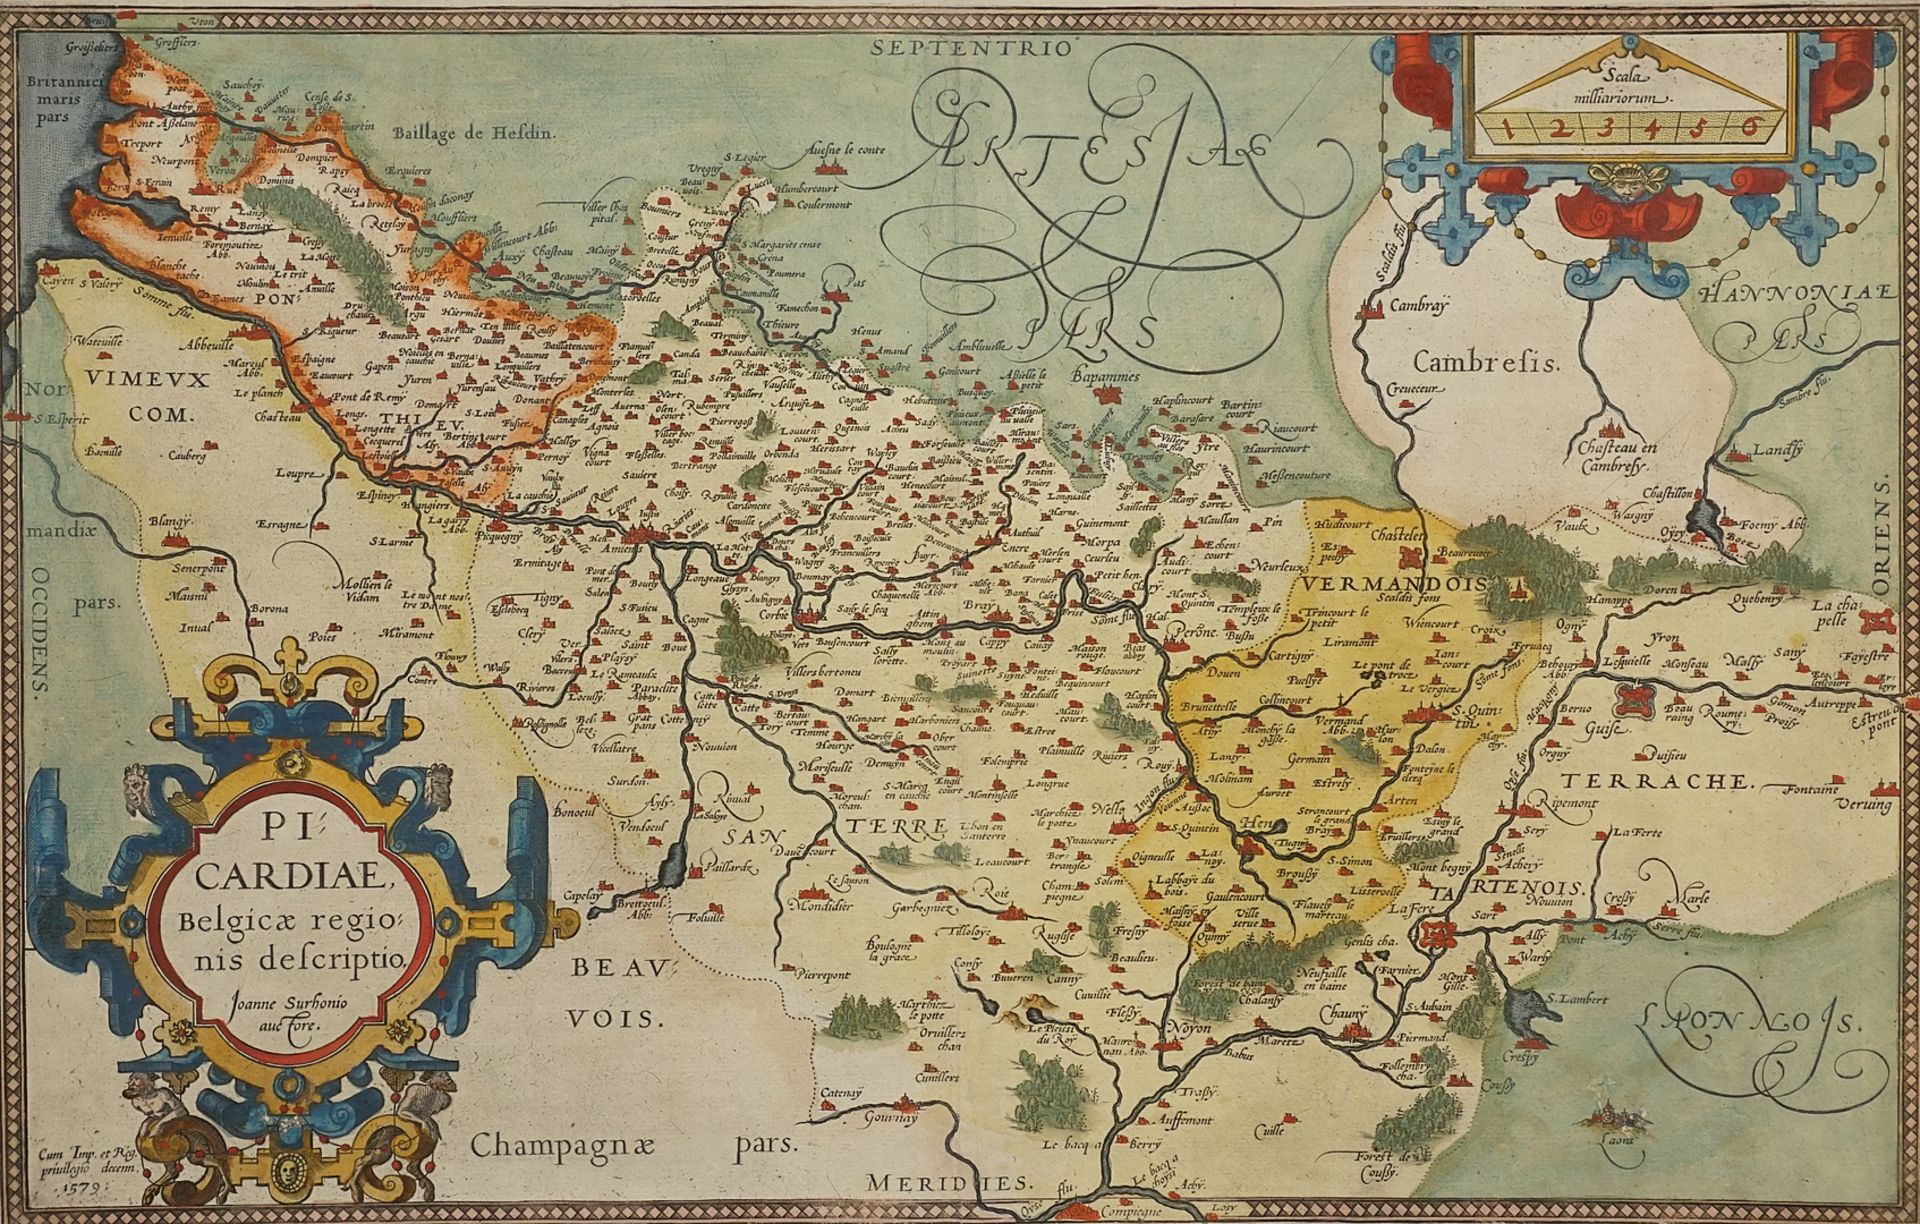 According to Johann Surhon, "Picardiae, Belgicae regionis descriptio" (Map of Picardy)